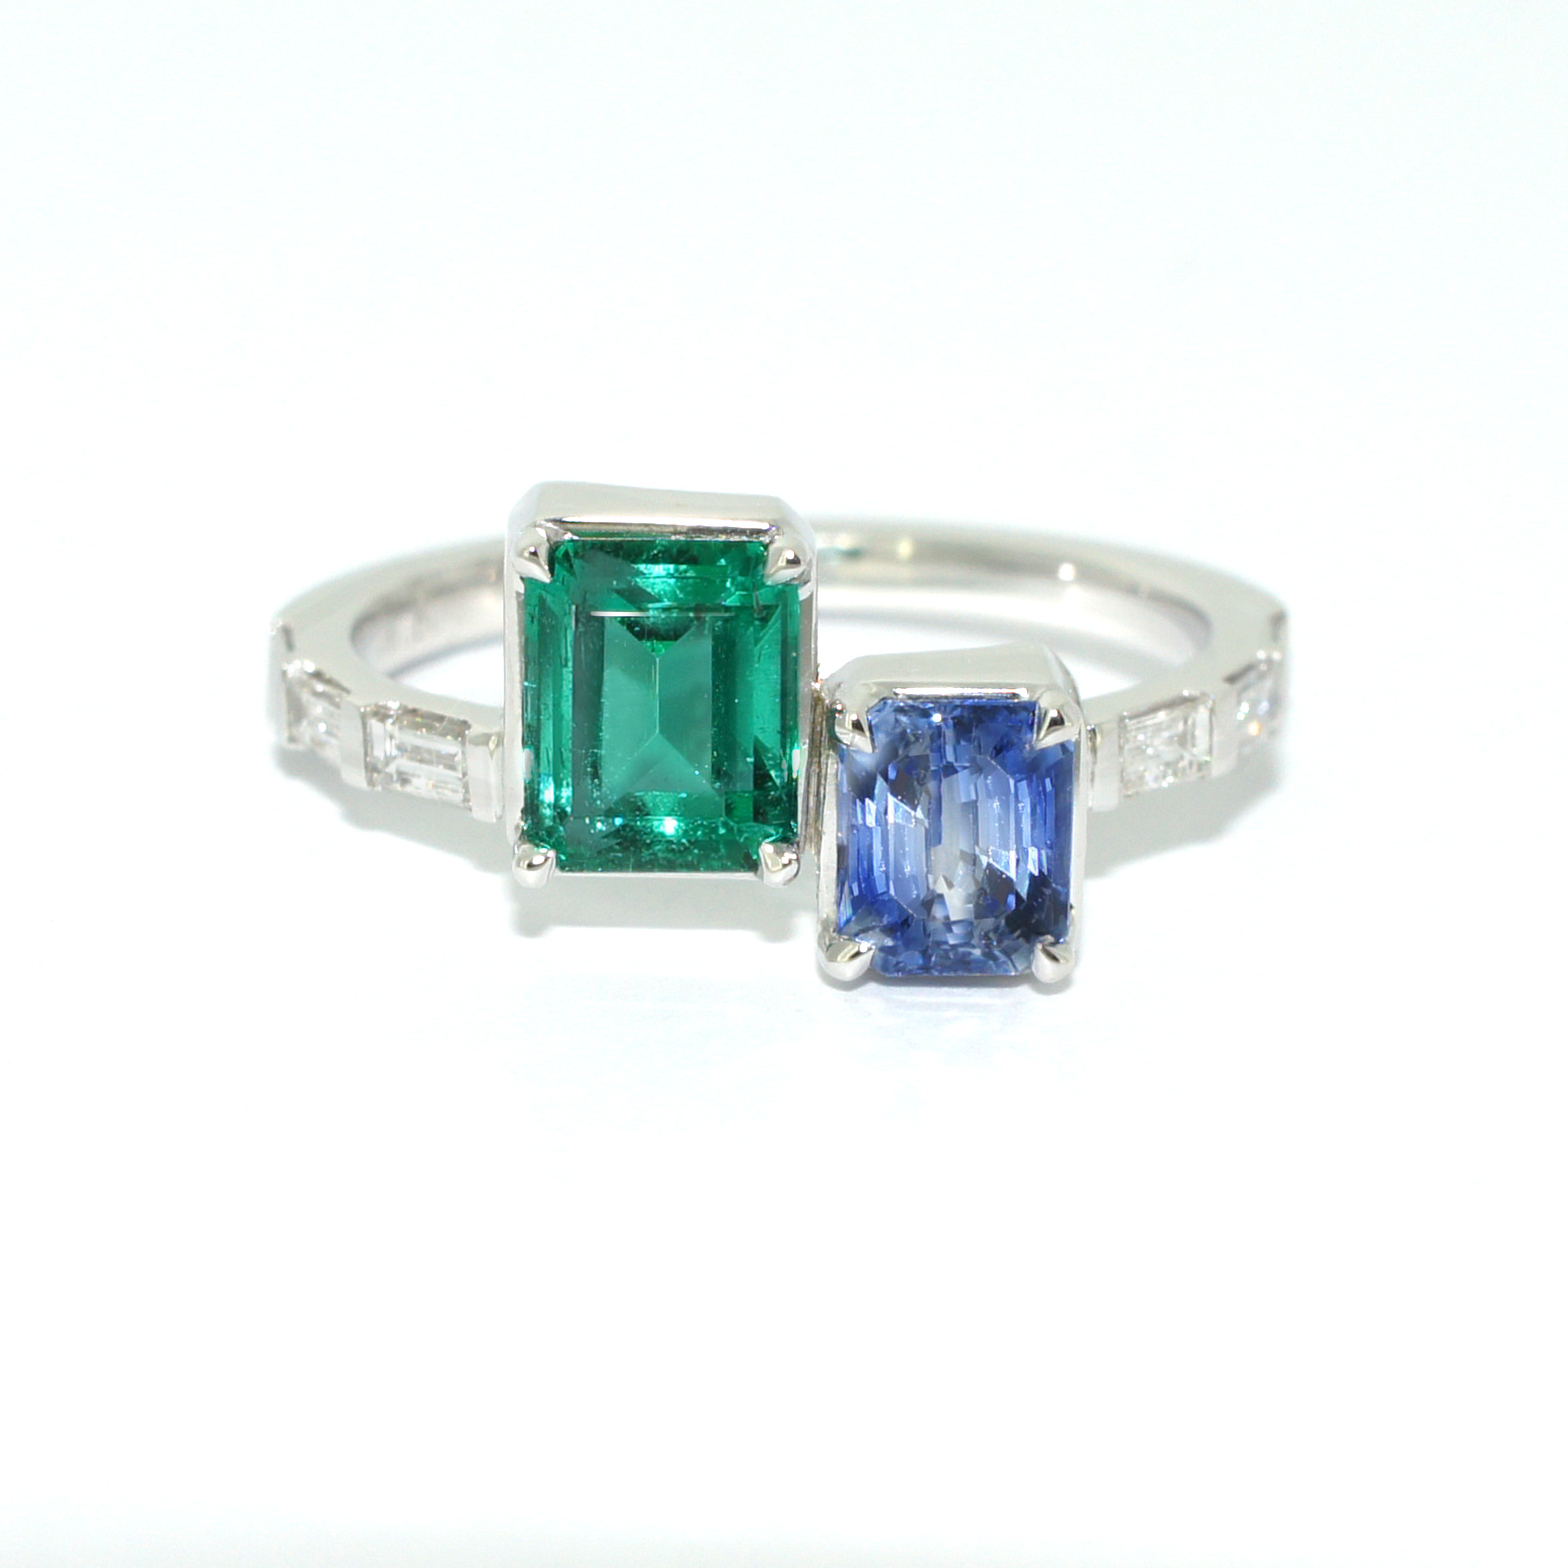 Bespoke emerald sapphire diamond toi et moi ring in white gold by Sydney jeweller Lizunova Fine Jewels